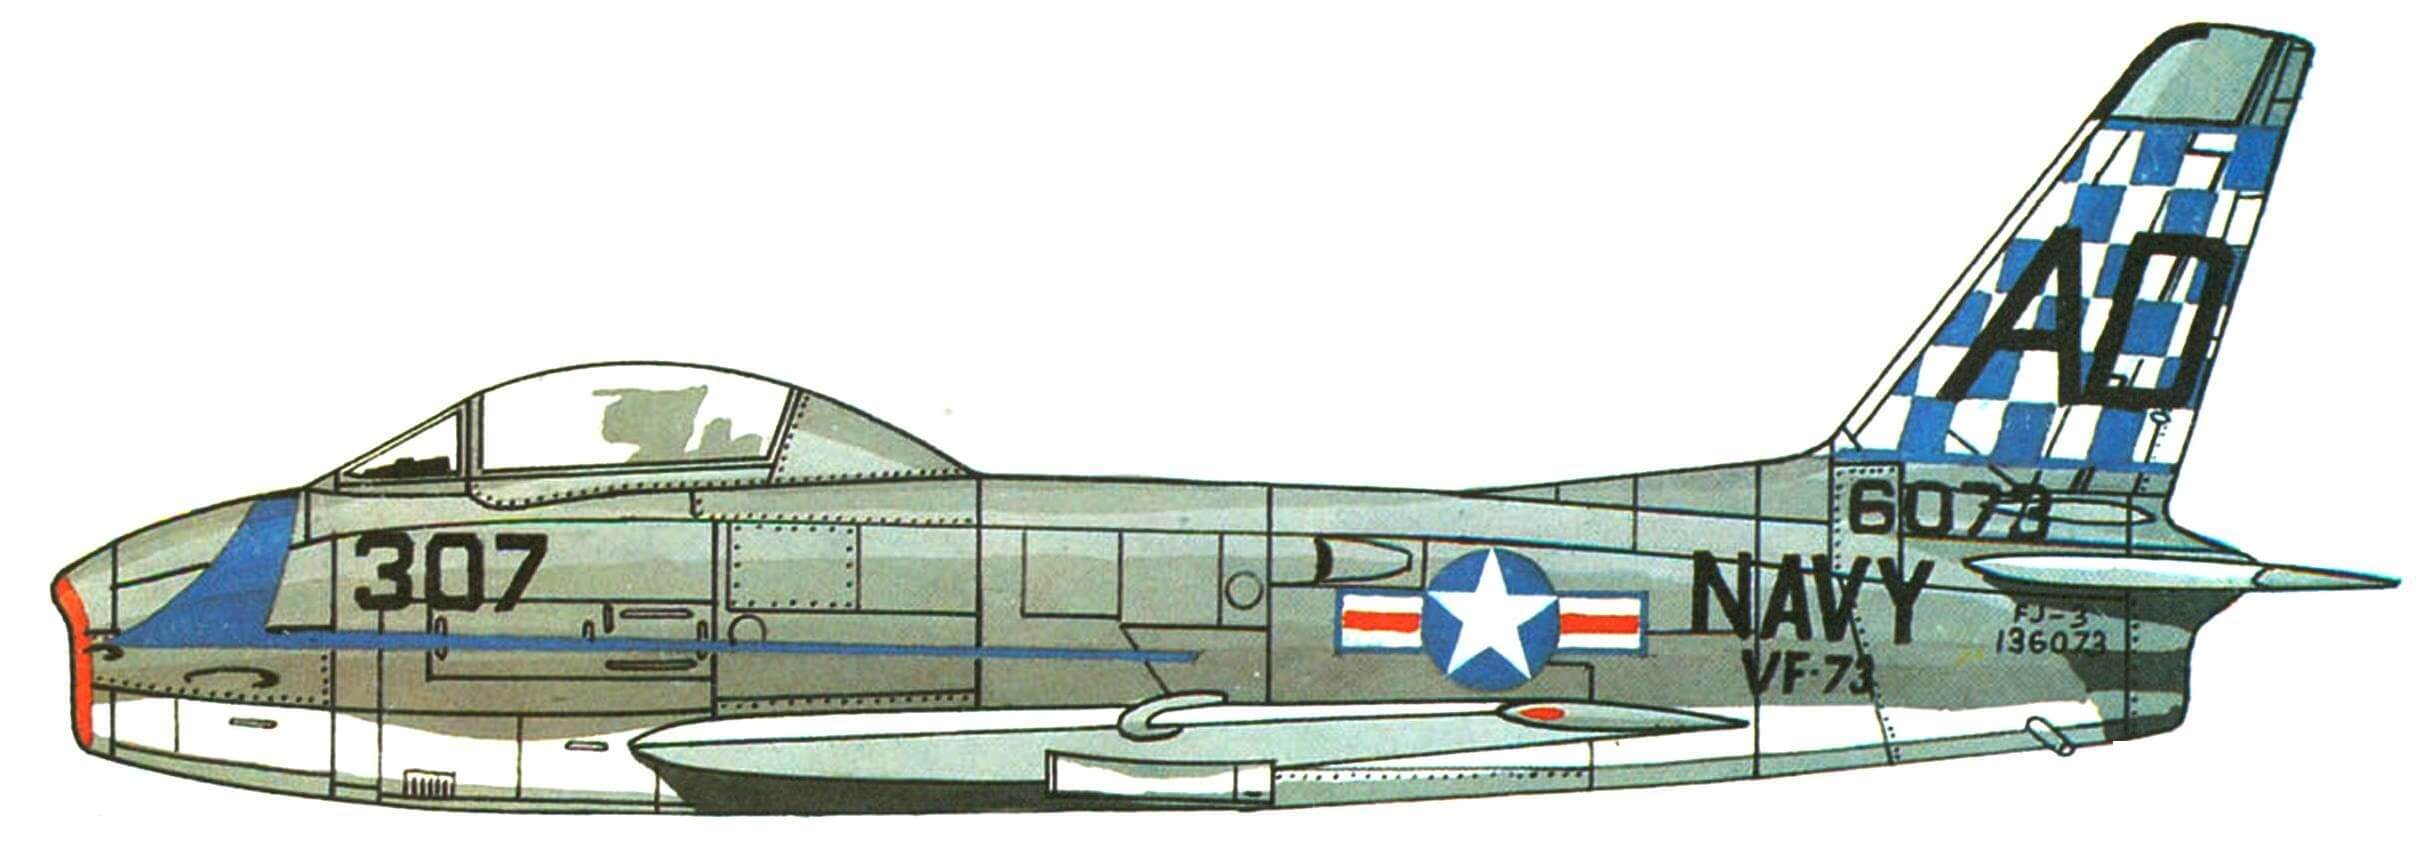 FJ-3 эскадрильи VF-73, авианосец "Randolph", 1958г.